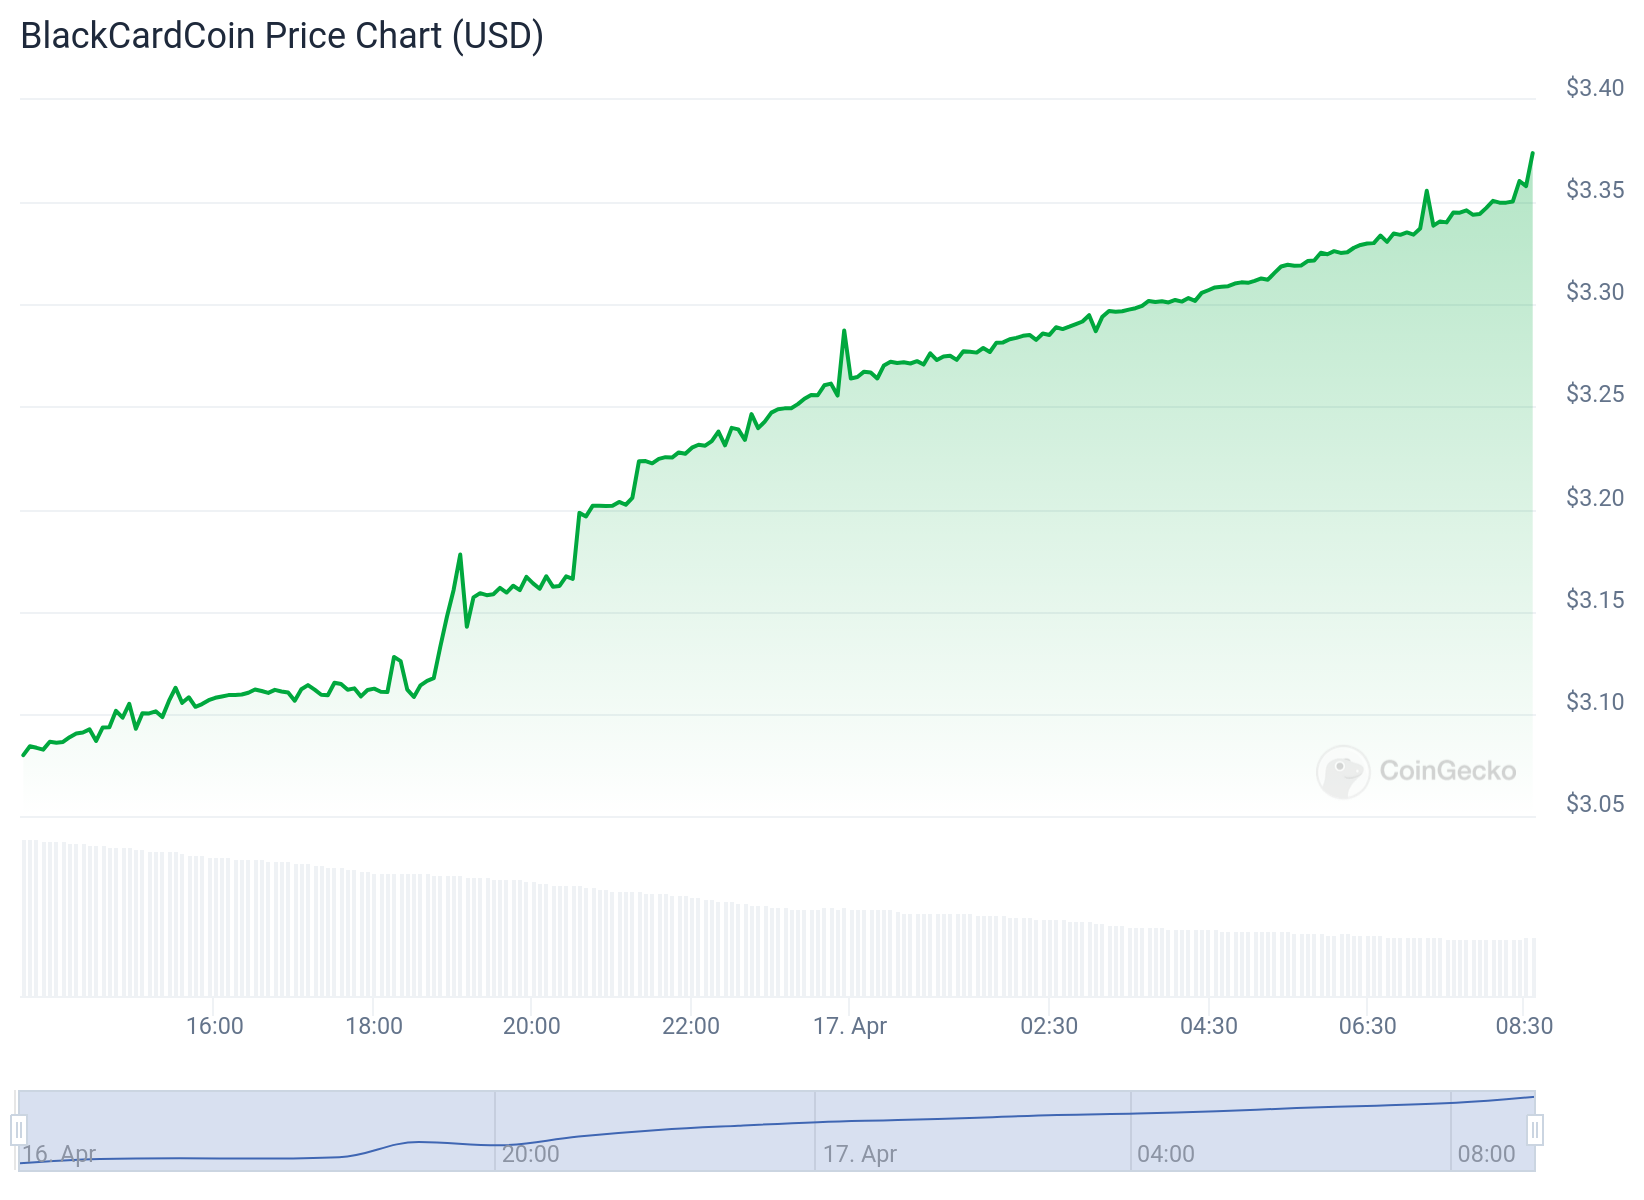 BlackCardCoin Price Chart